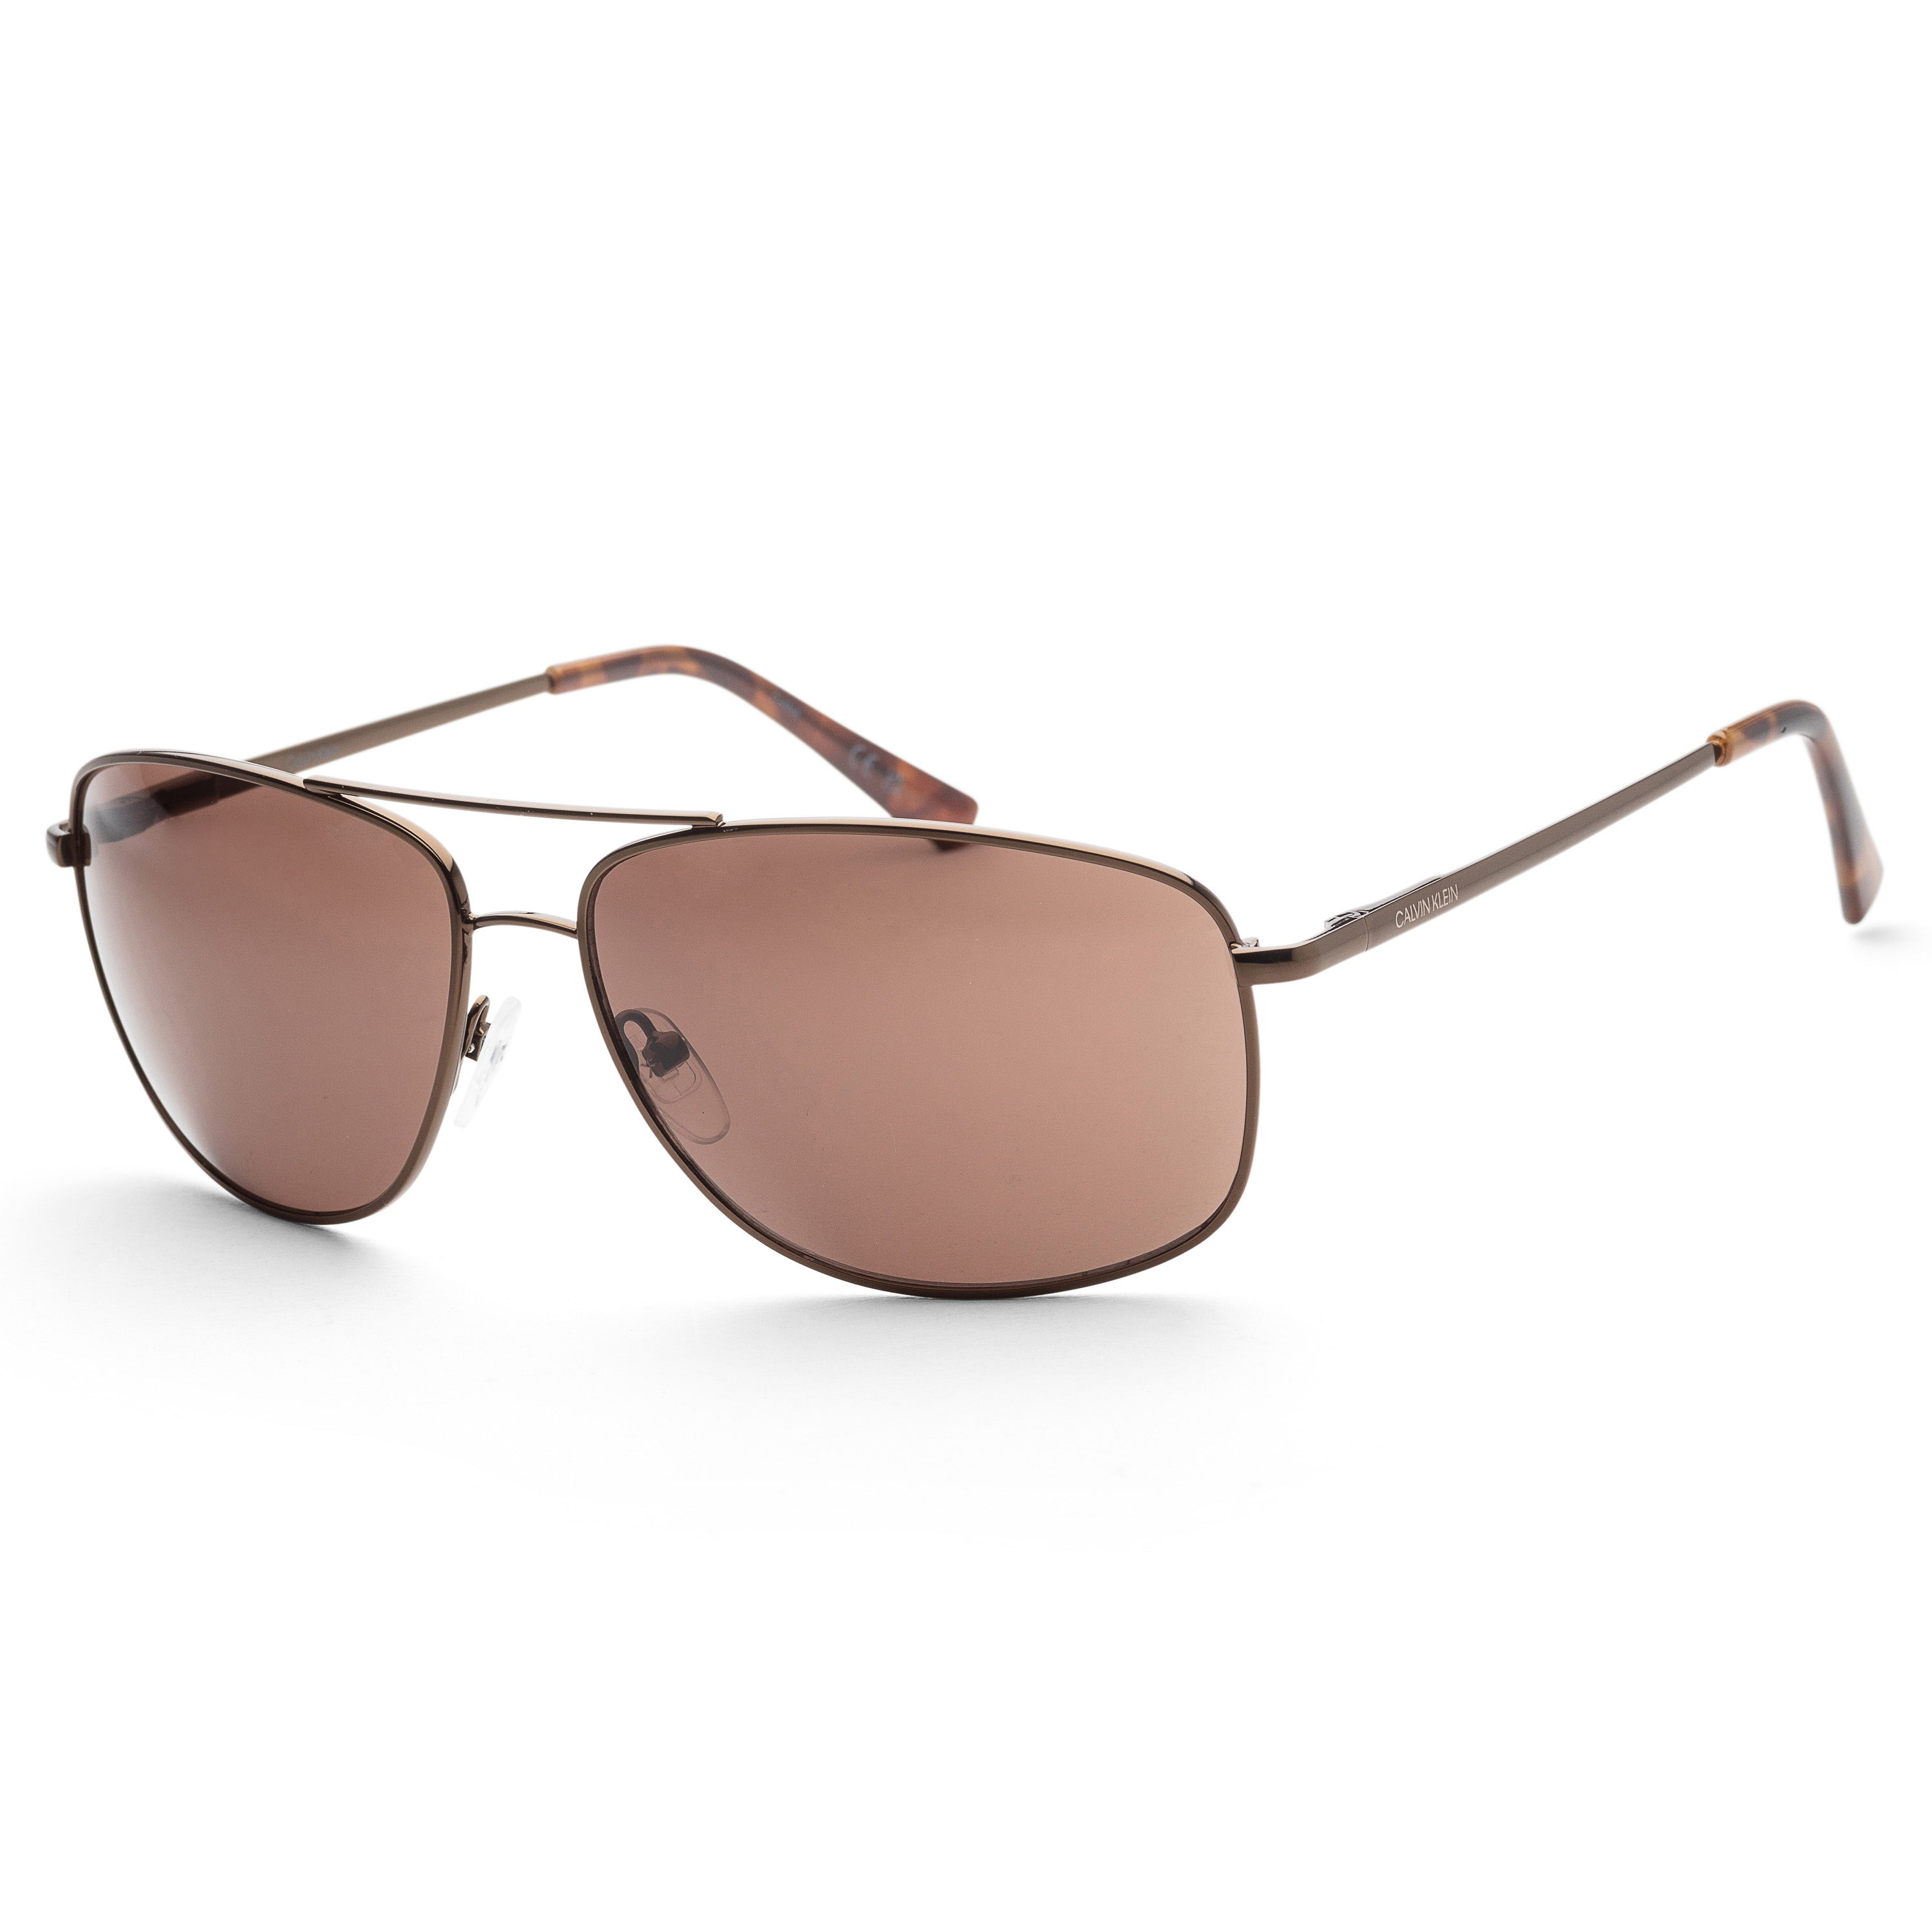 title:Calvin Klein Men's CK19137S-200 Fashion 63mm Brown Sunglasses;color:Brown